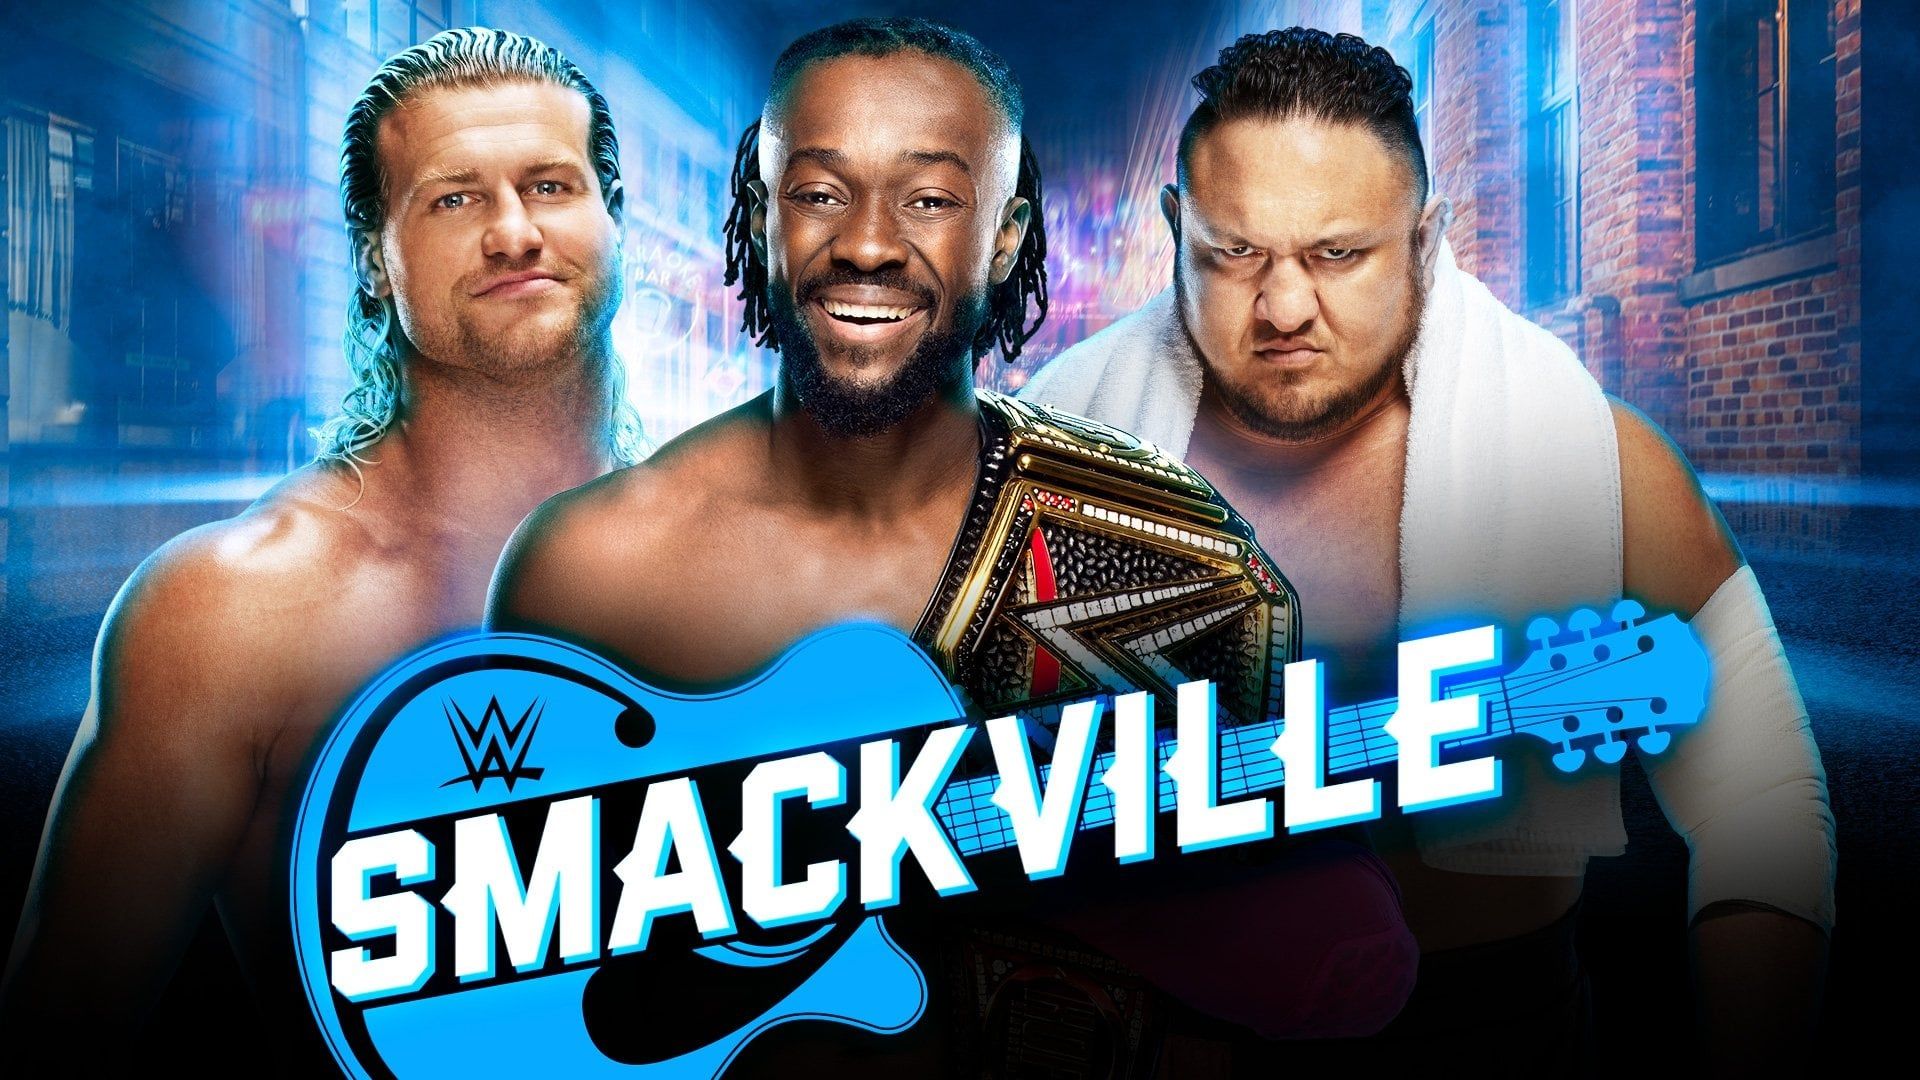 WWE Smackville background